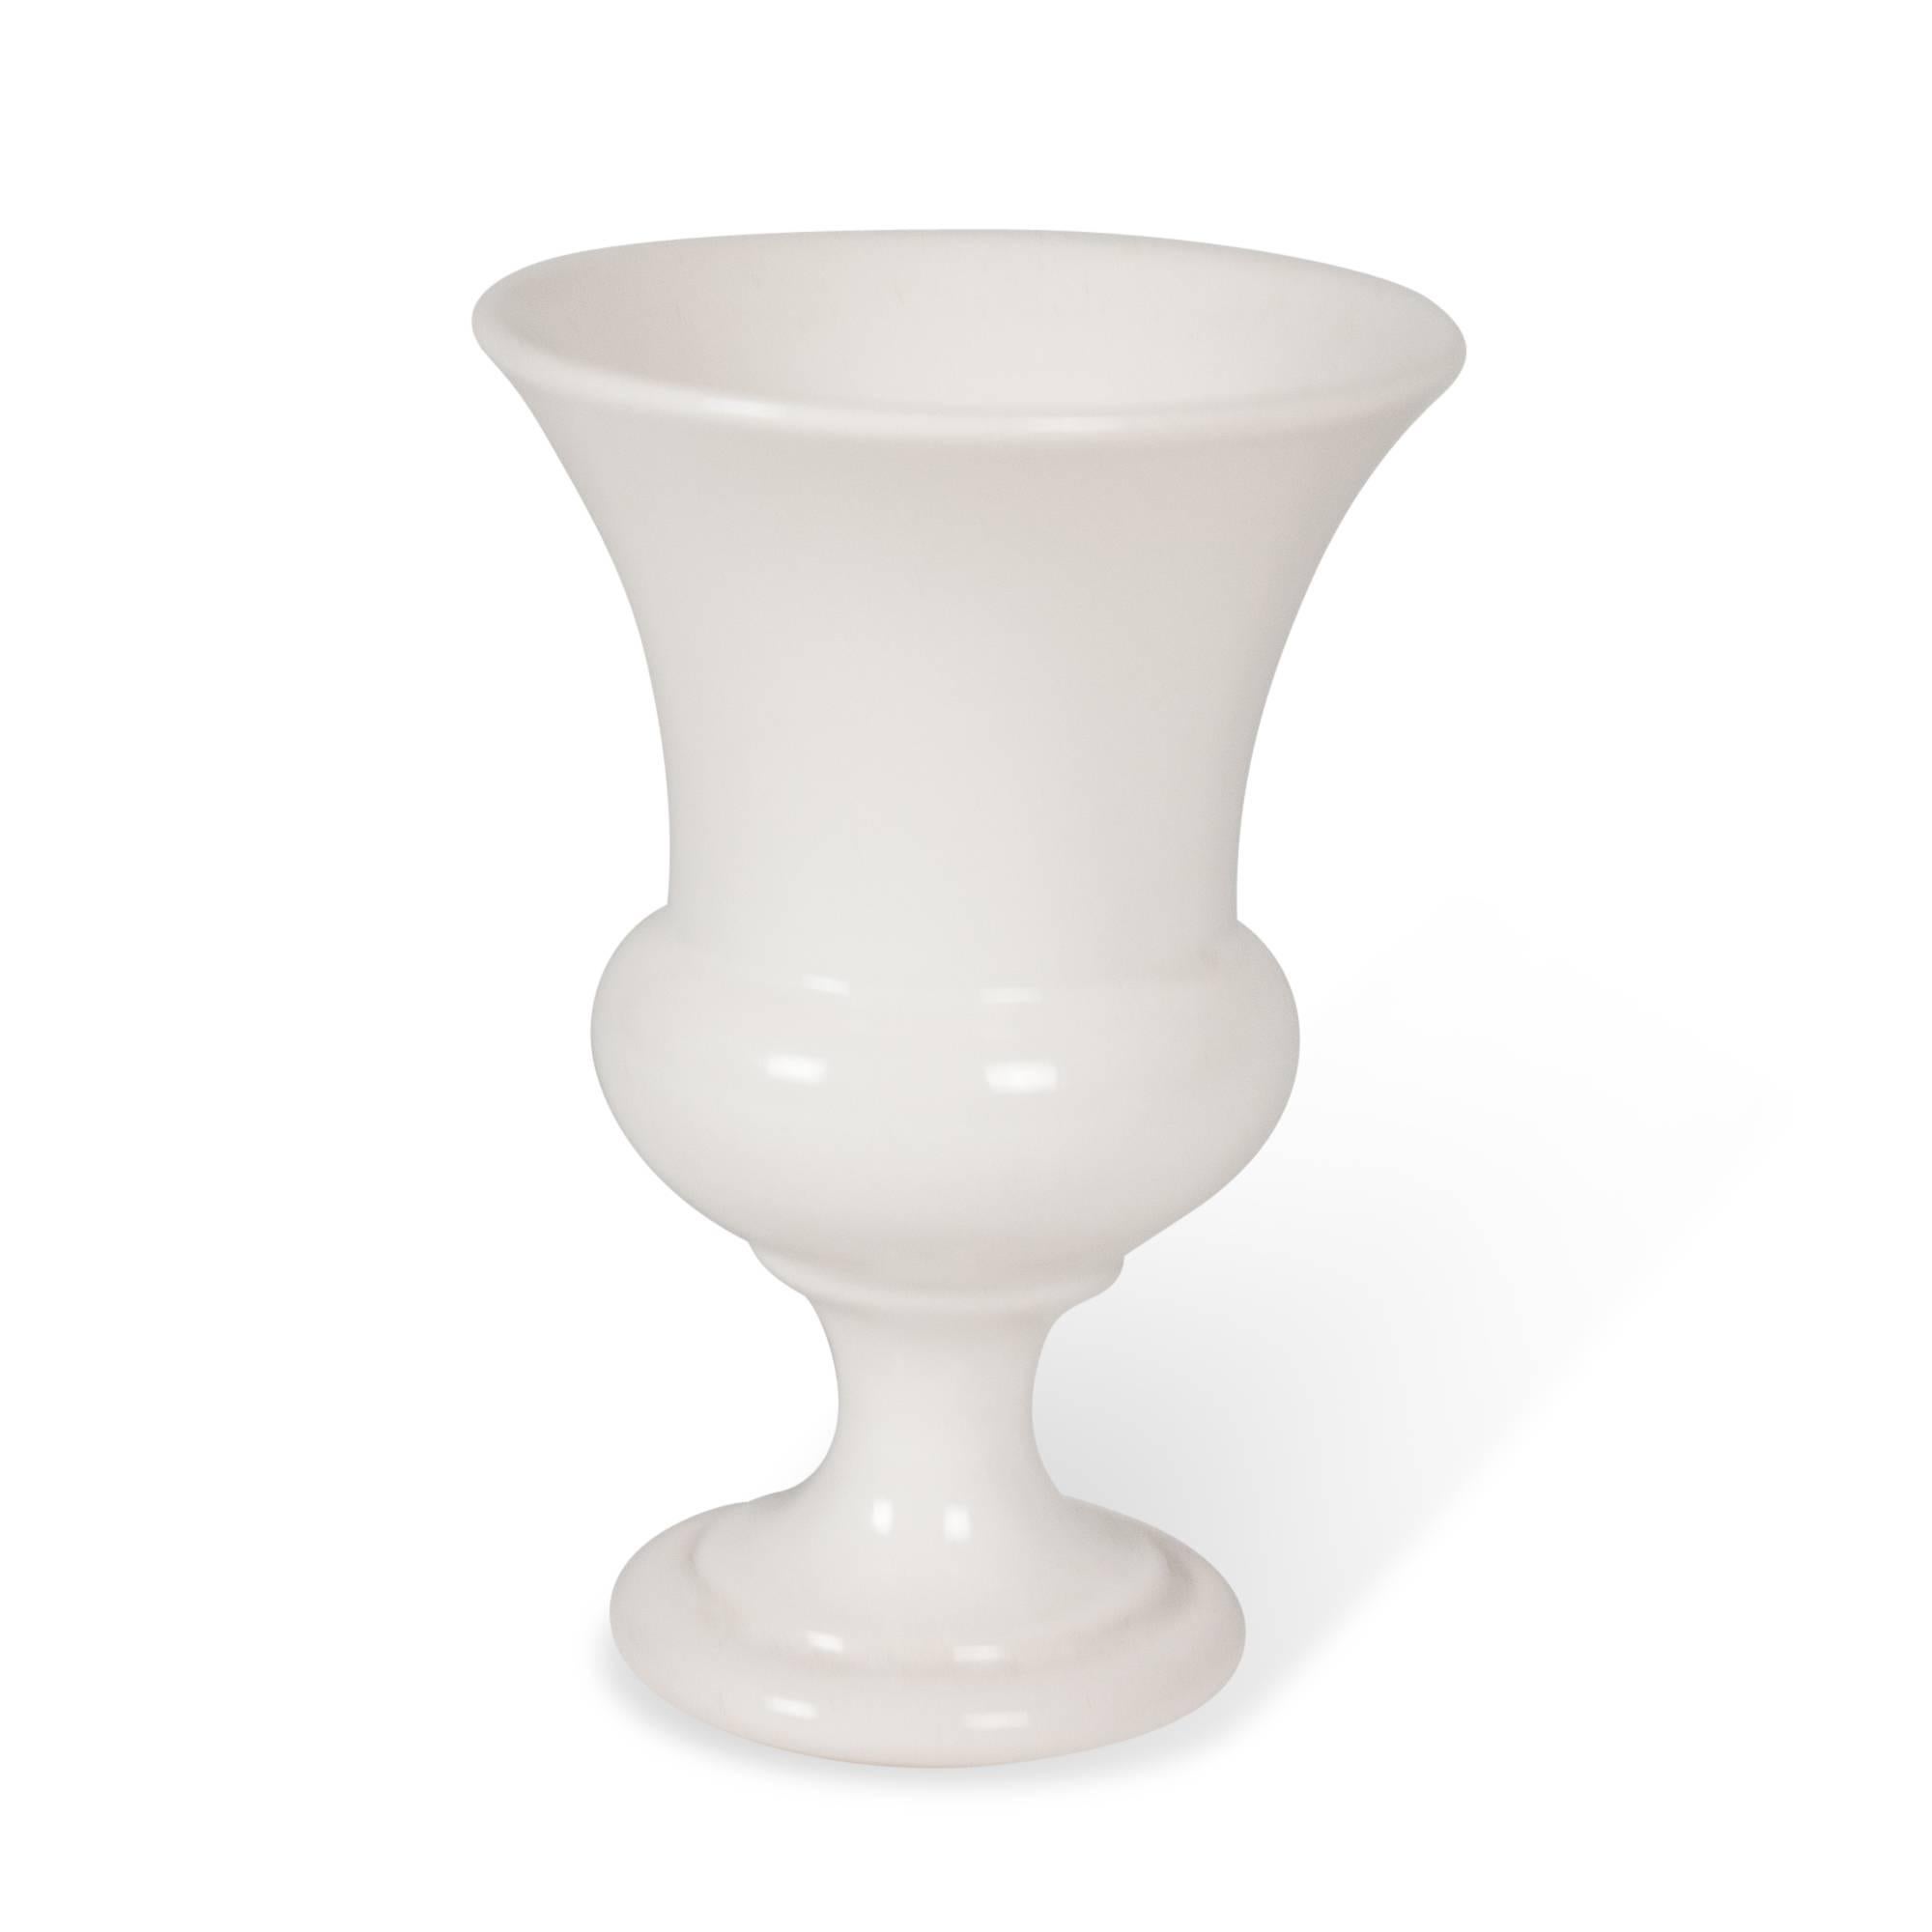 Modern White Ceramic Urn Form Vase by Pol Chambost For Sale